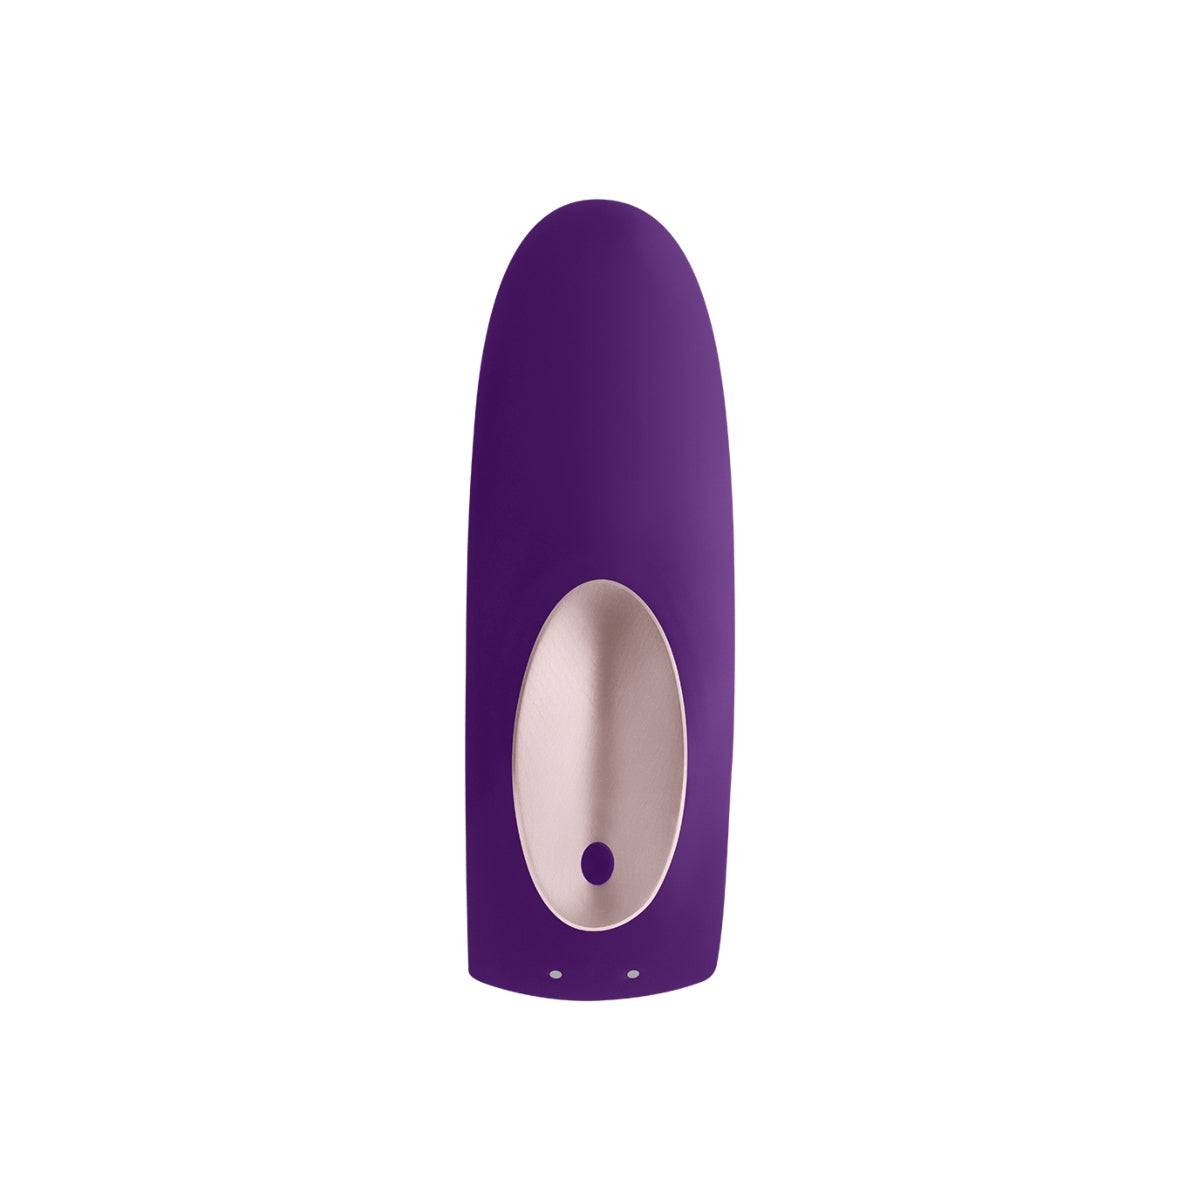 Satisfyer Double Plus Remote Partner Vibrator Purple